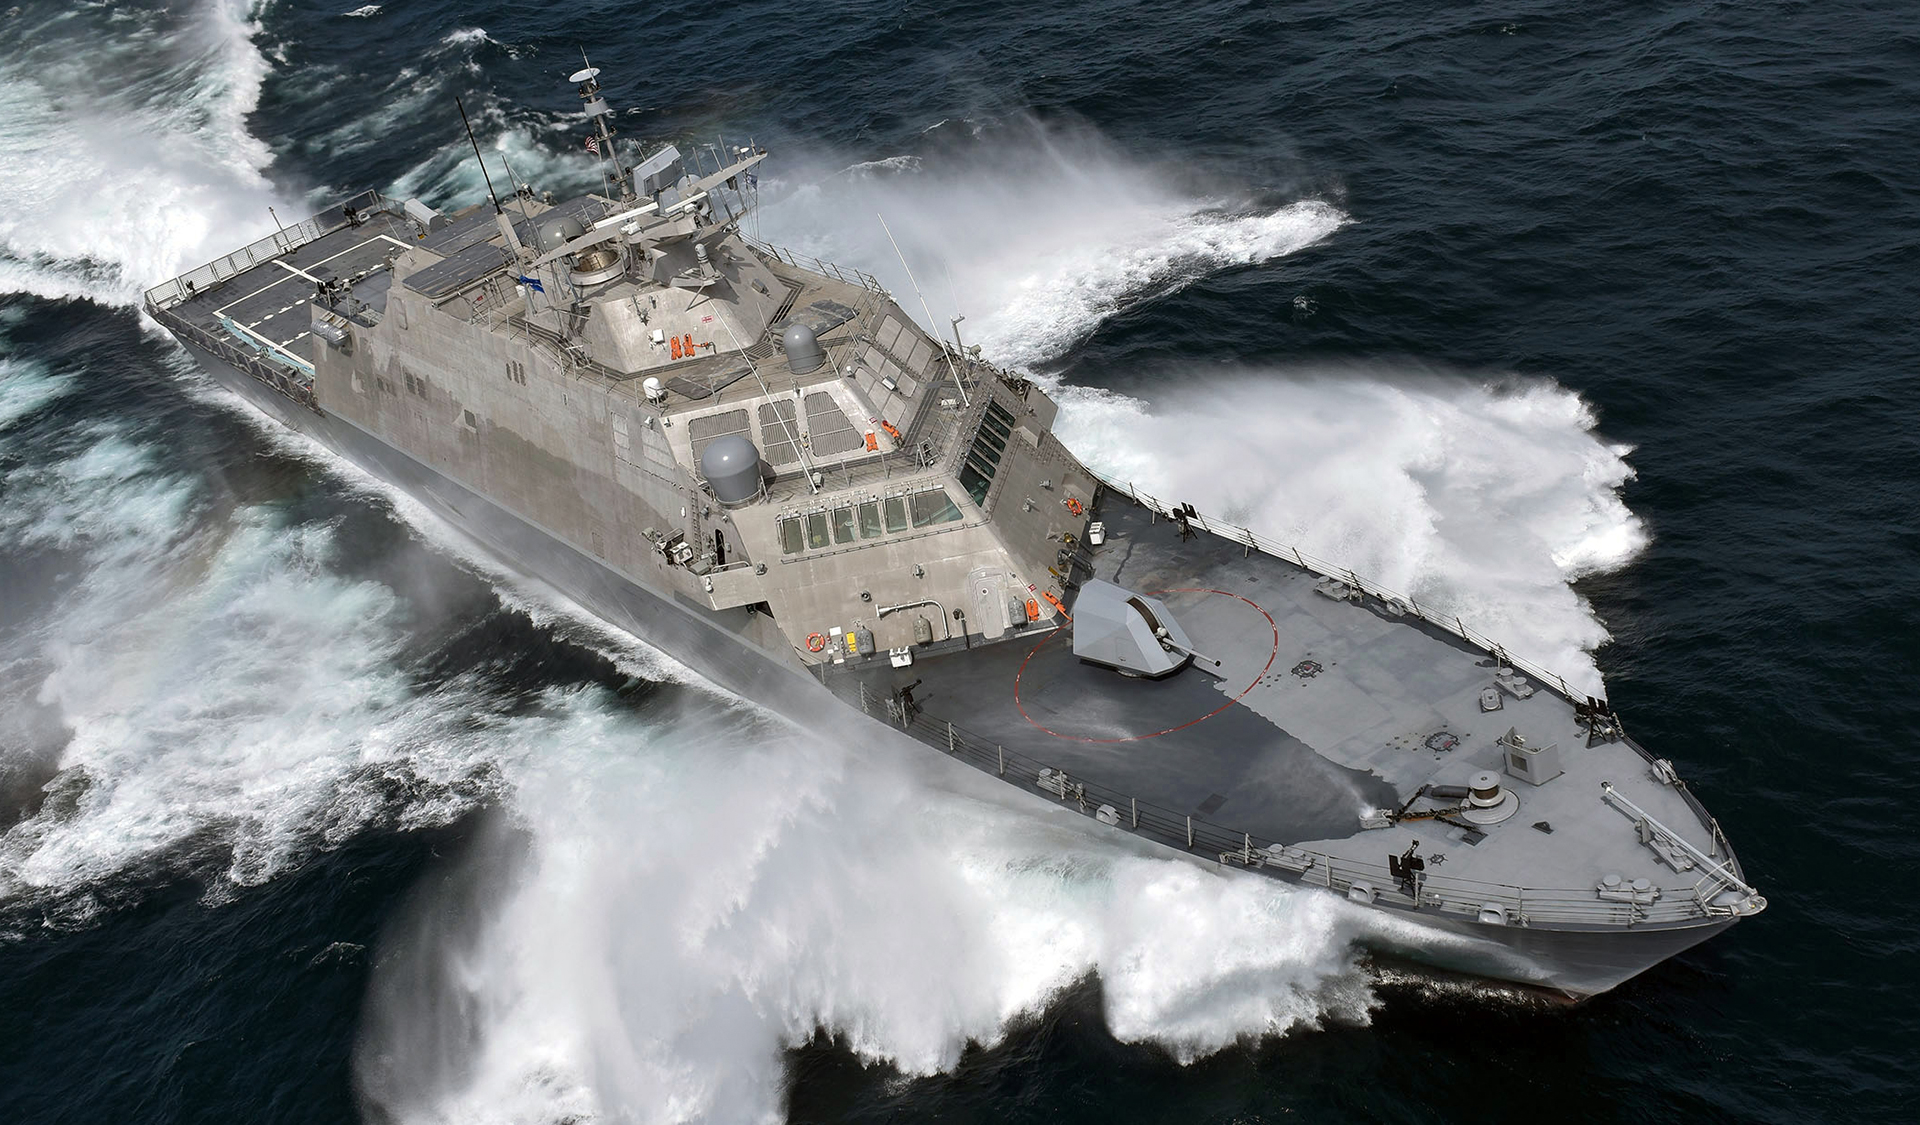 Lockheed Martin Freedom class (littoral combat ship program)